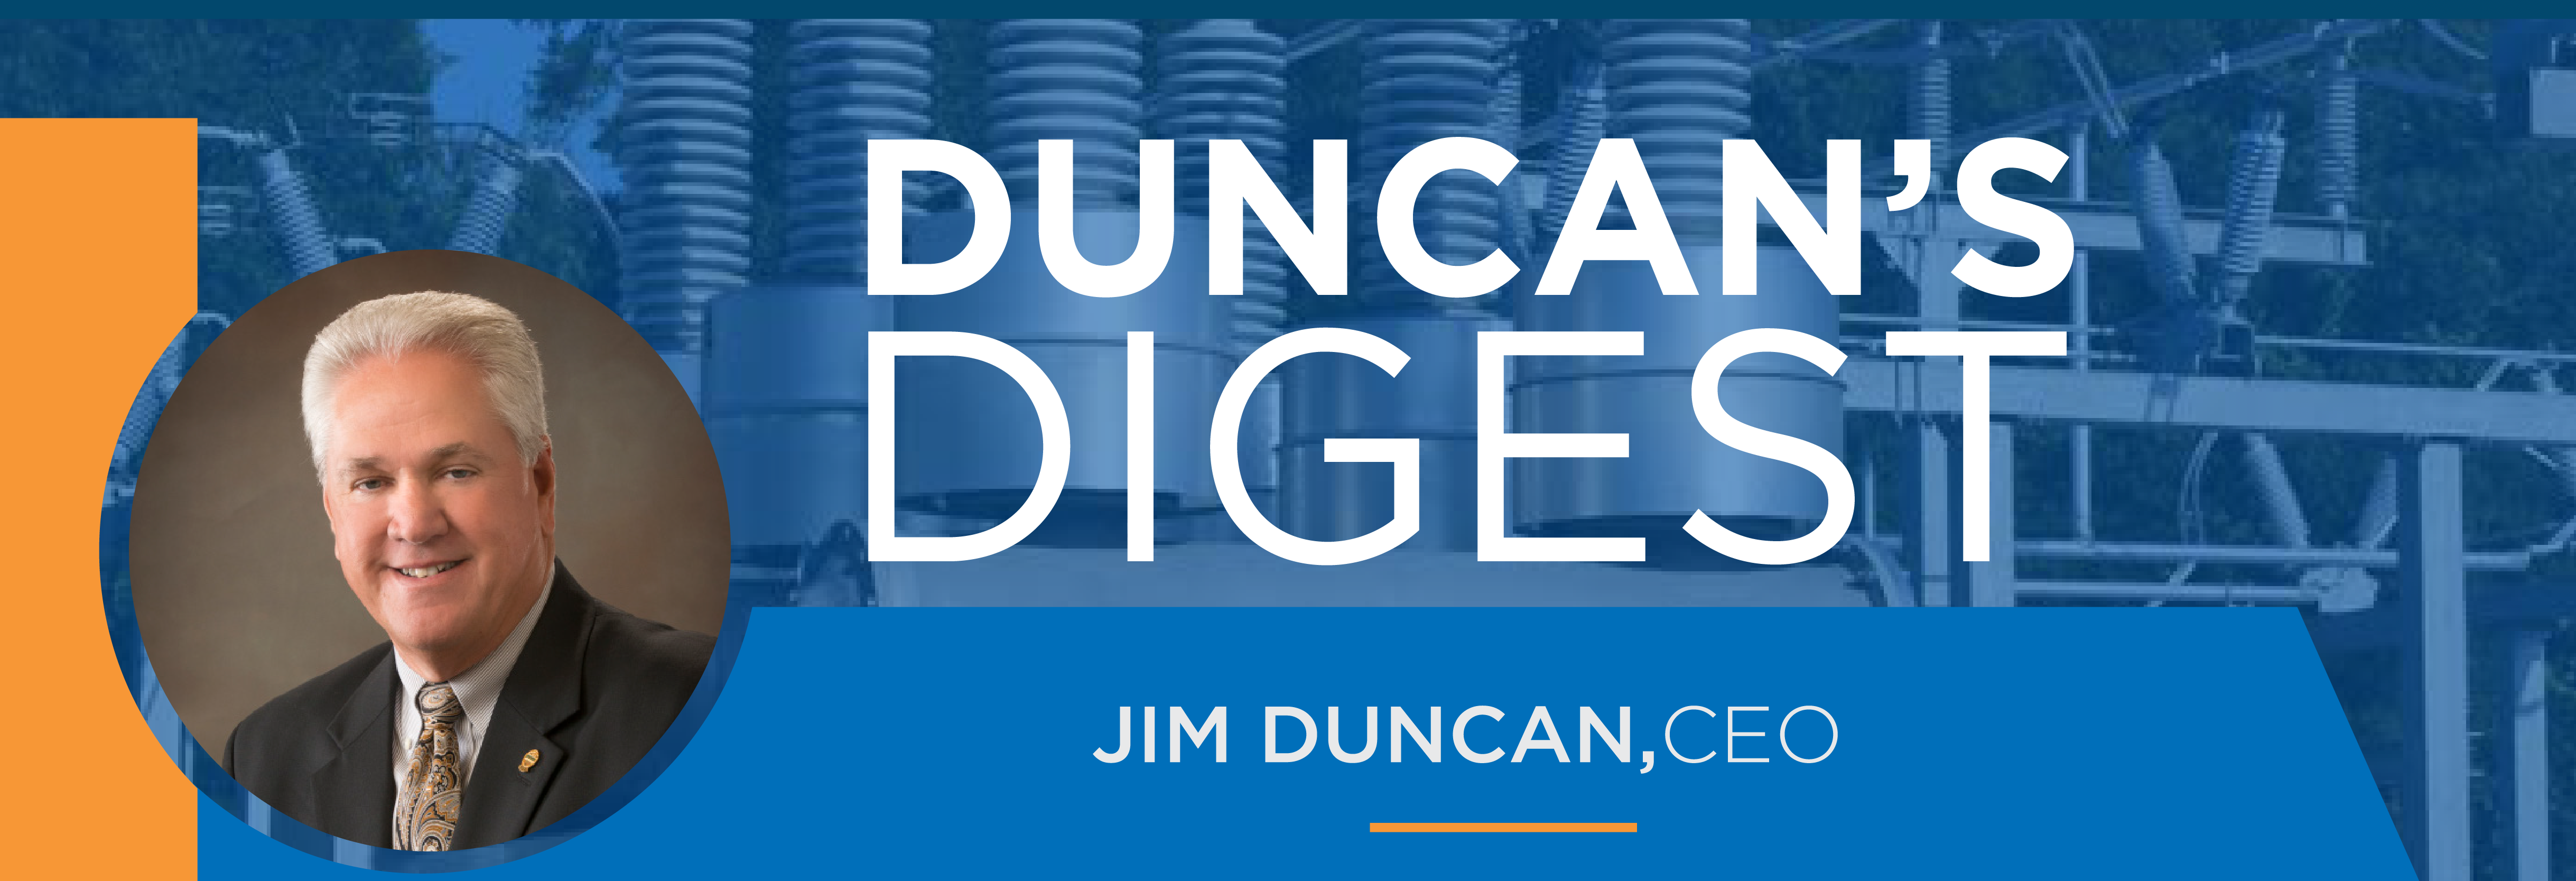 SECO News Duncan's Digest 2019